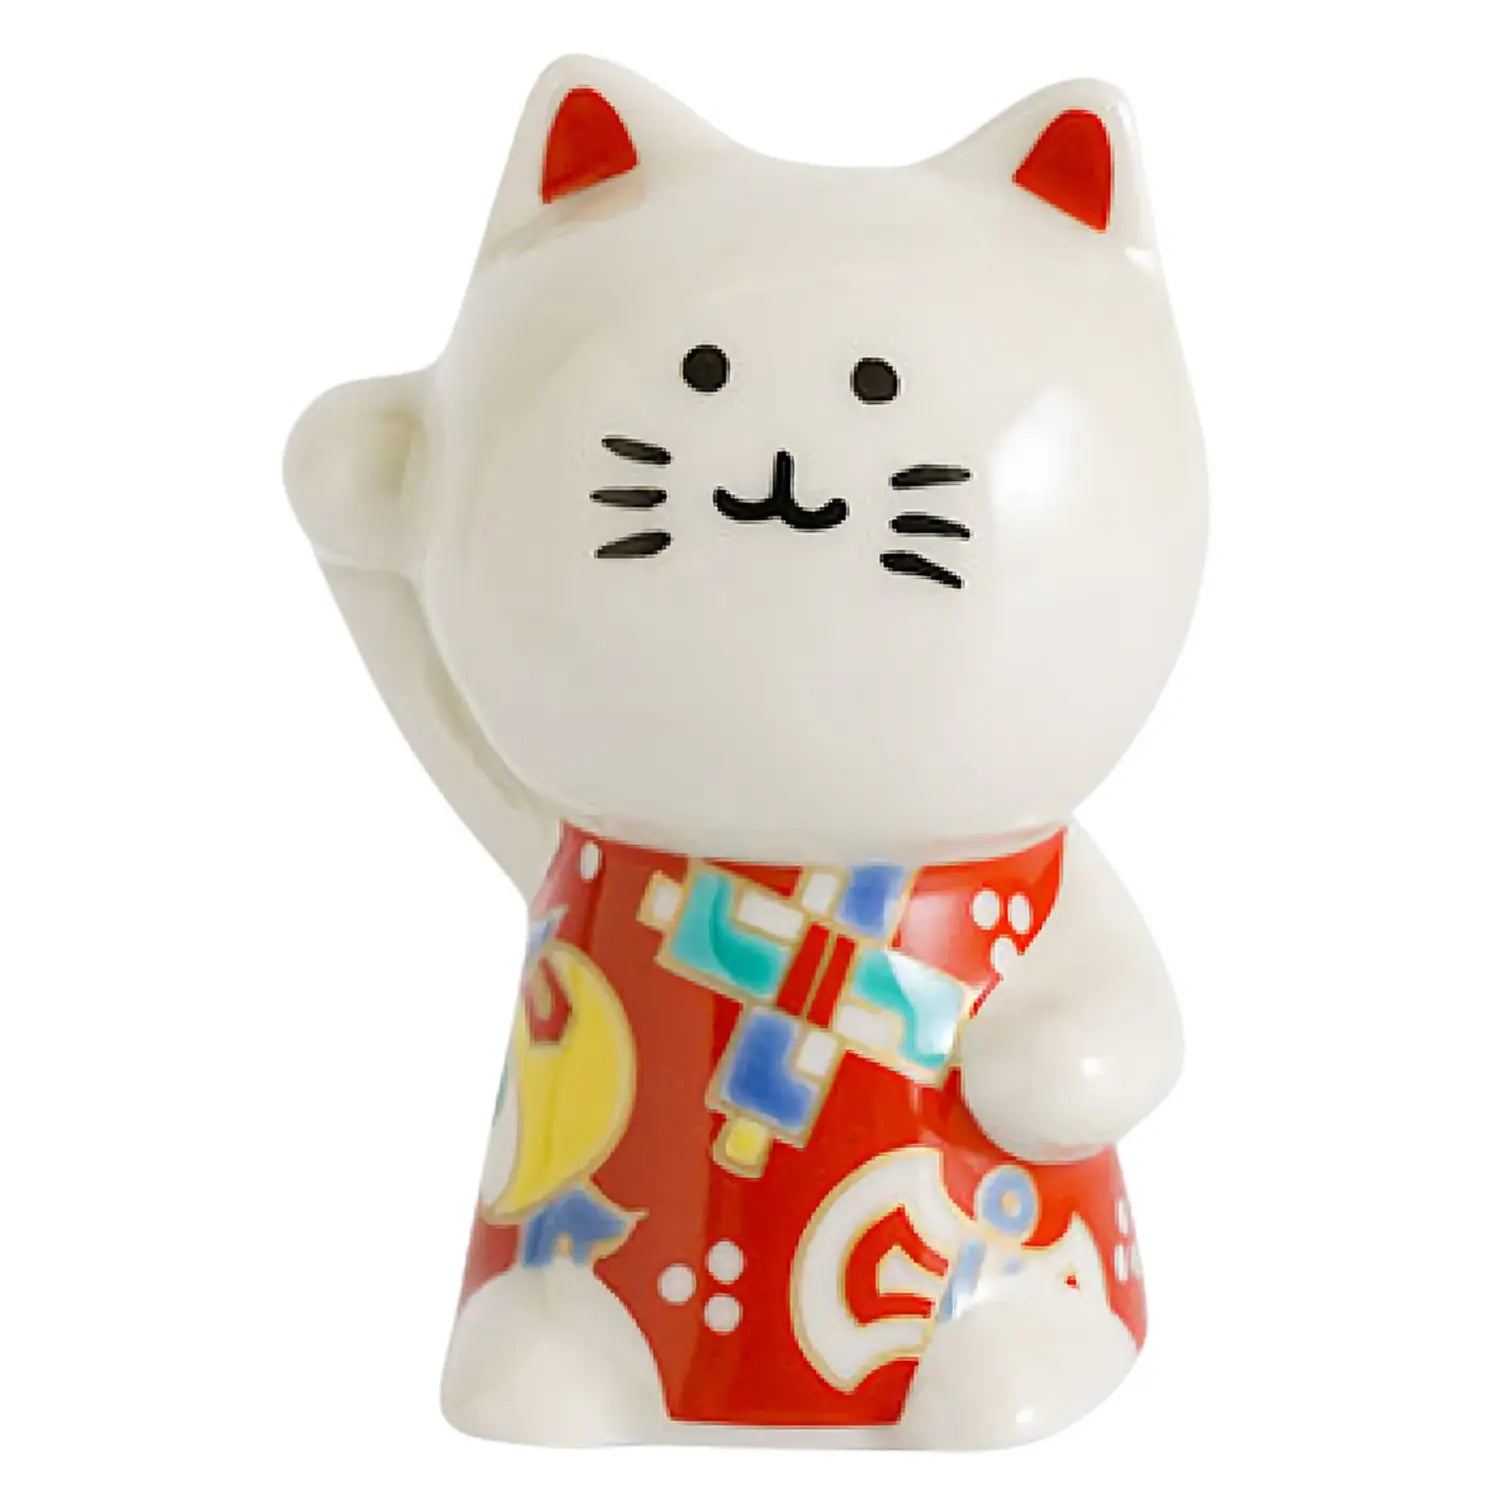 White Maneki Neko Fortune Cat Figurine by Decole Japan available at Miya.